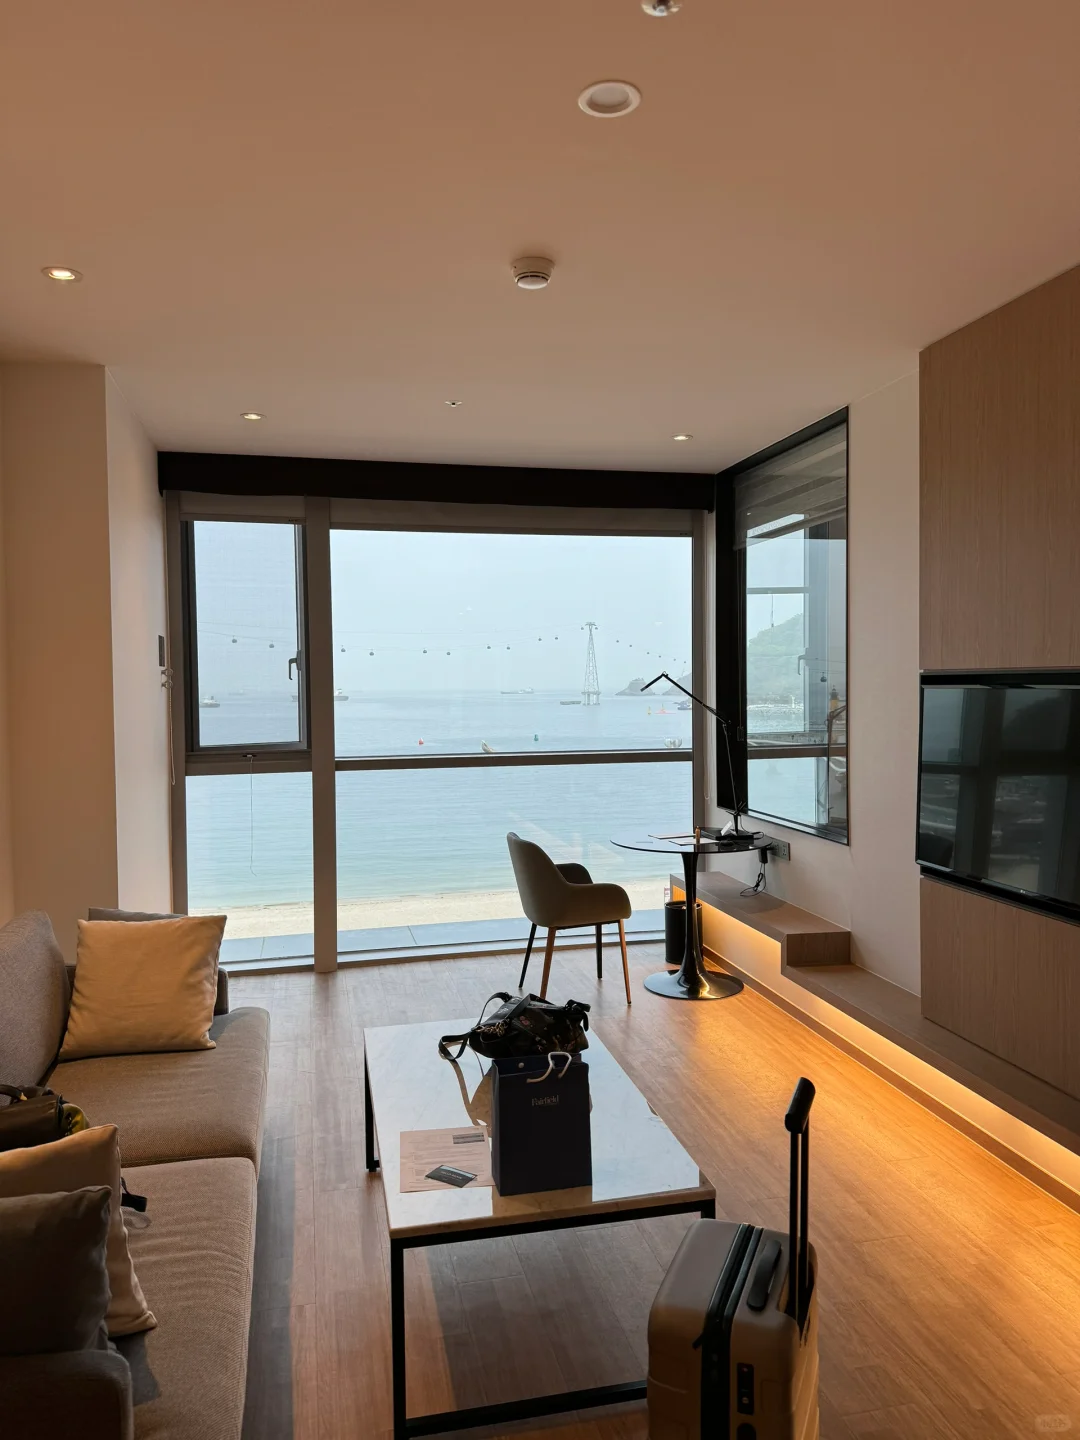 Busan/Jeju-Fairfield Inn Busan has many suites near Songdo Beach